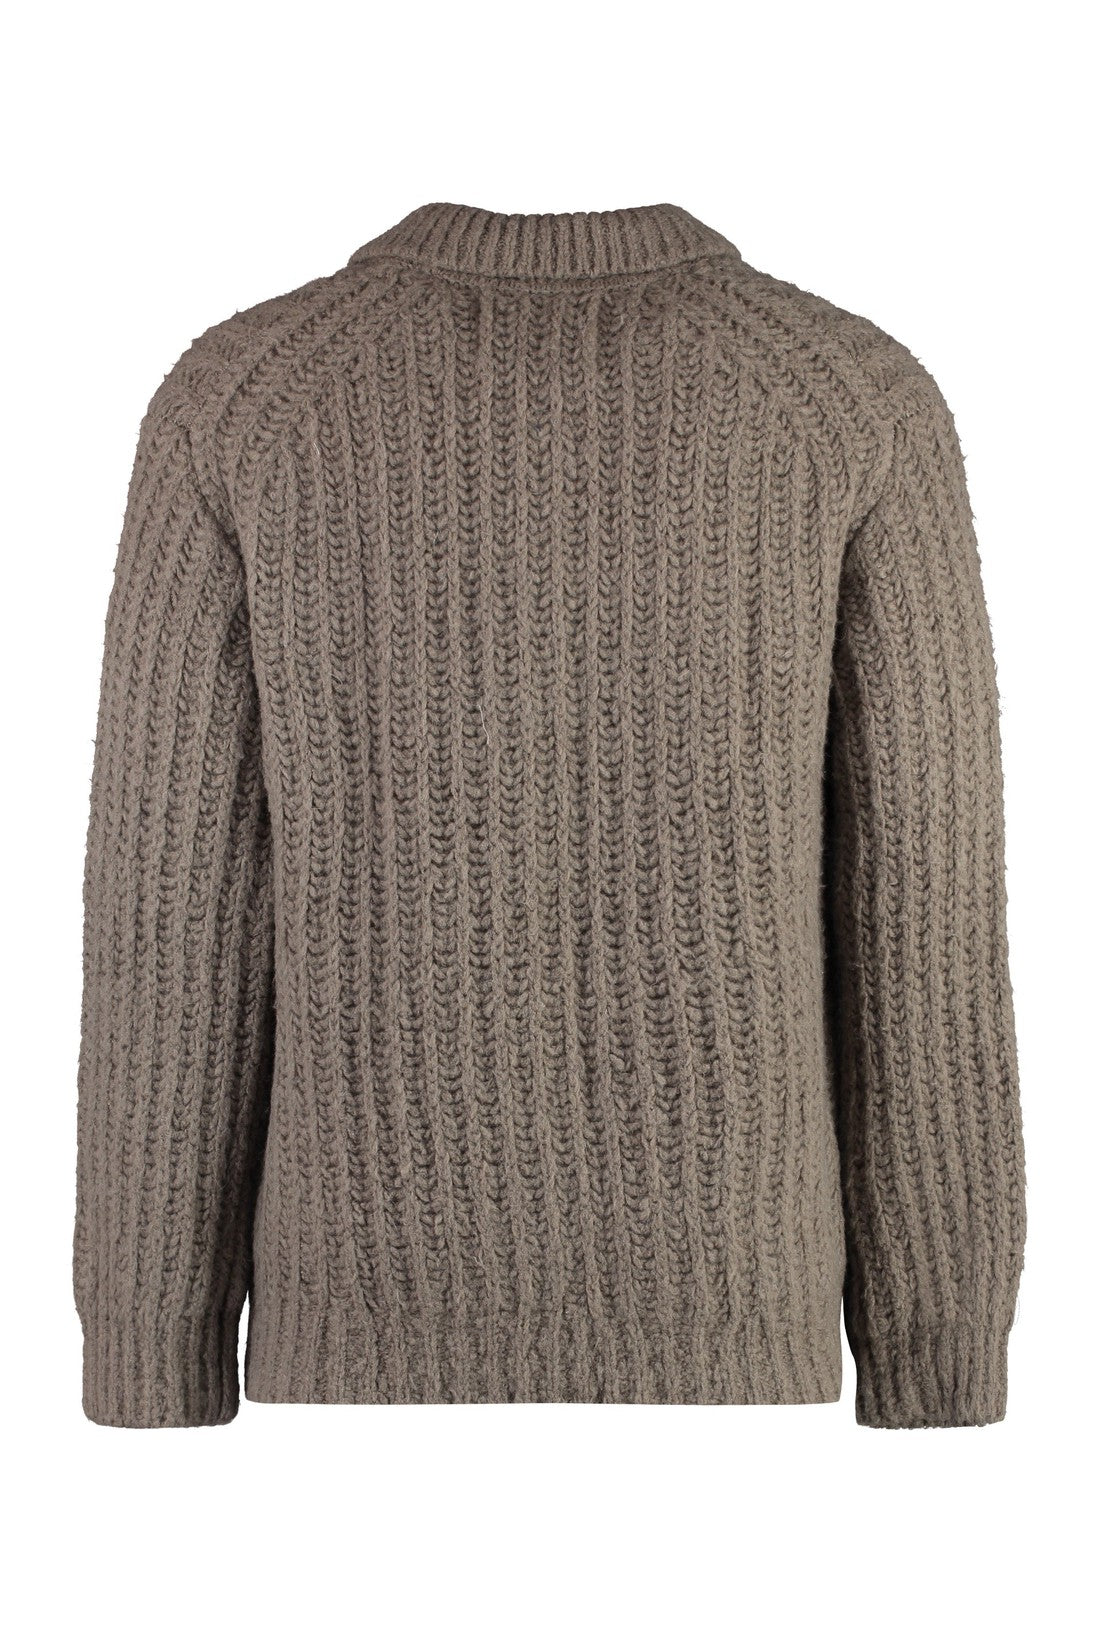 Wool-blend-crew-neck-sweater-GANT-designer-outlet-archivist-2.jpg